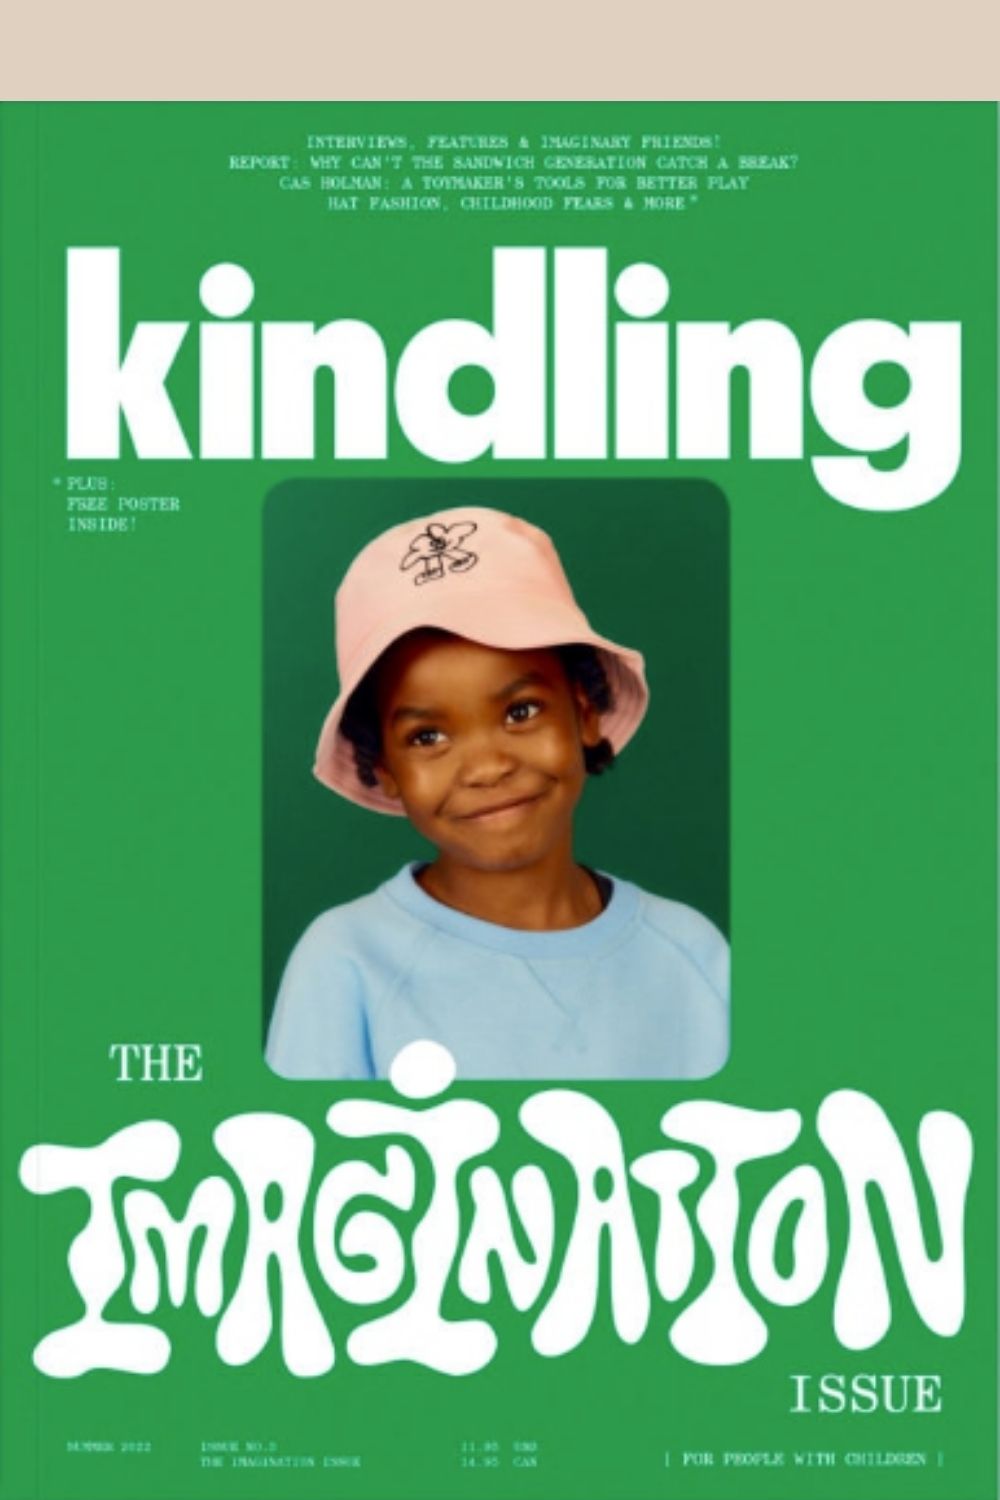 Kindling Magazine Issue 3 - The Imagination Issue